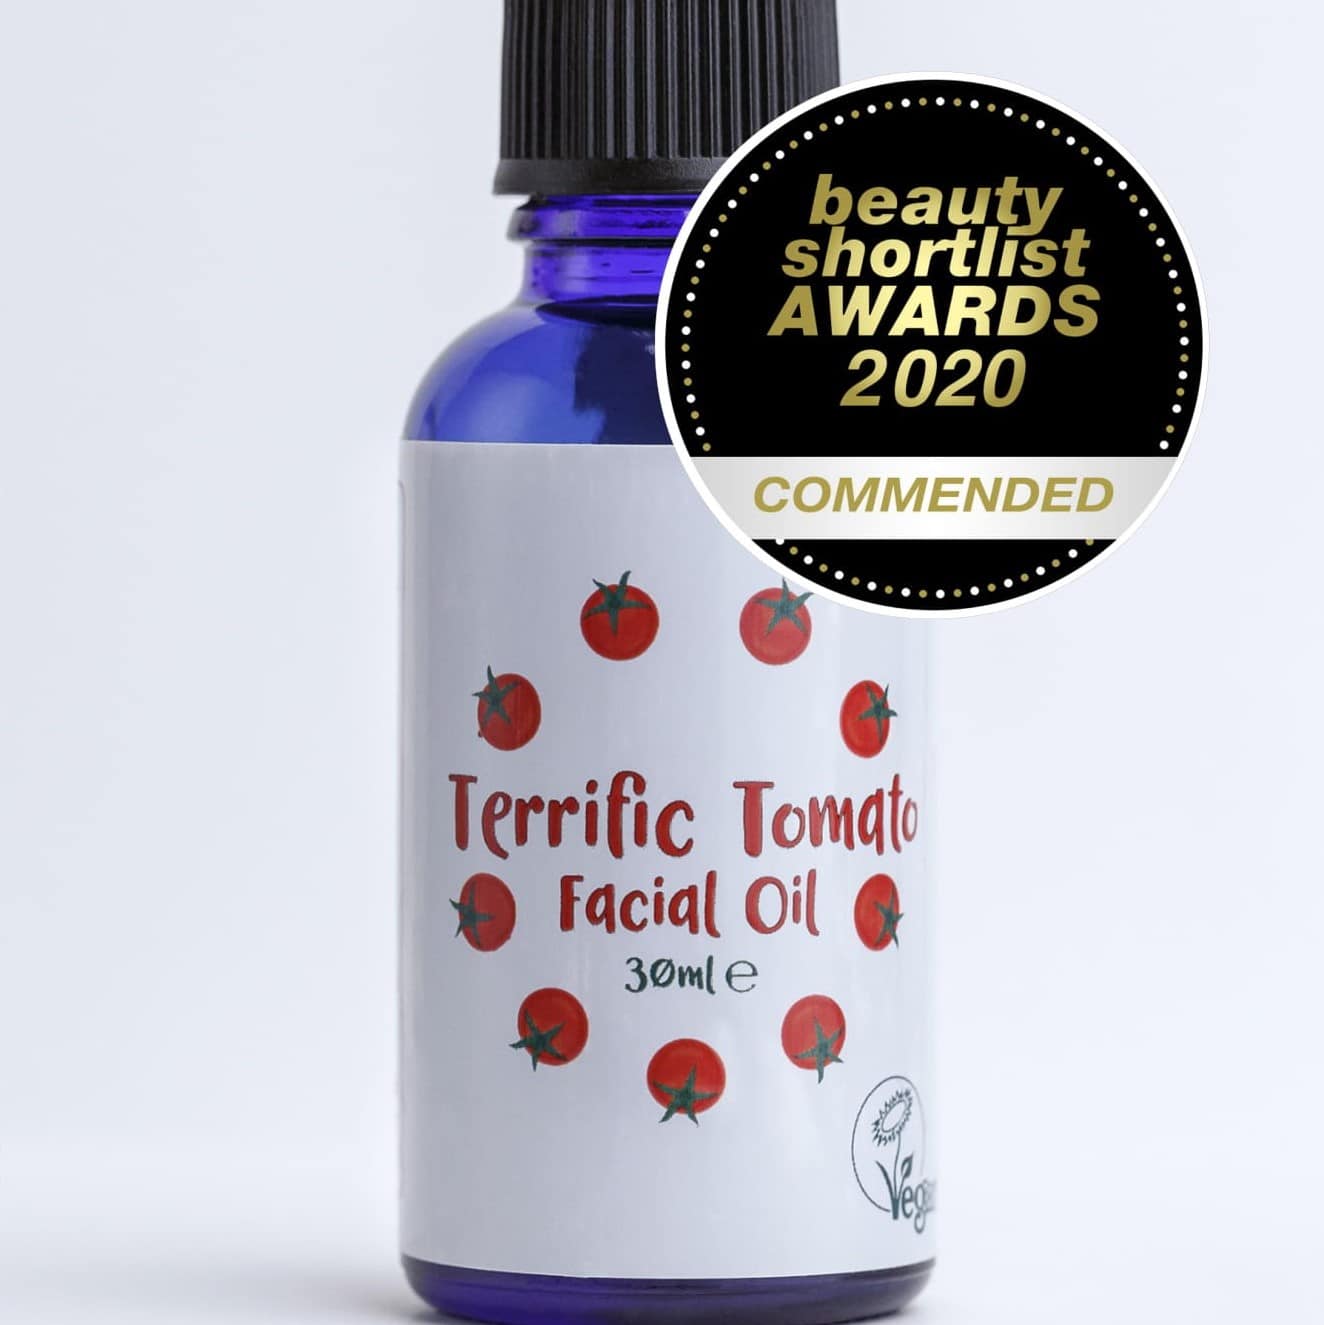 Terrific tomato facial oil